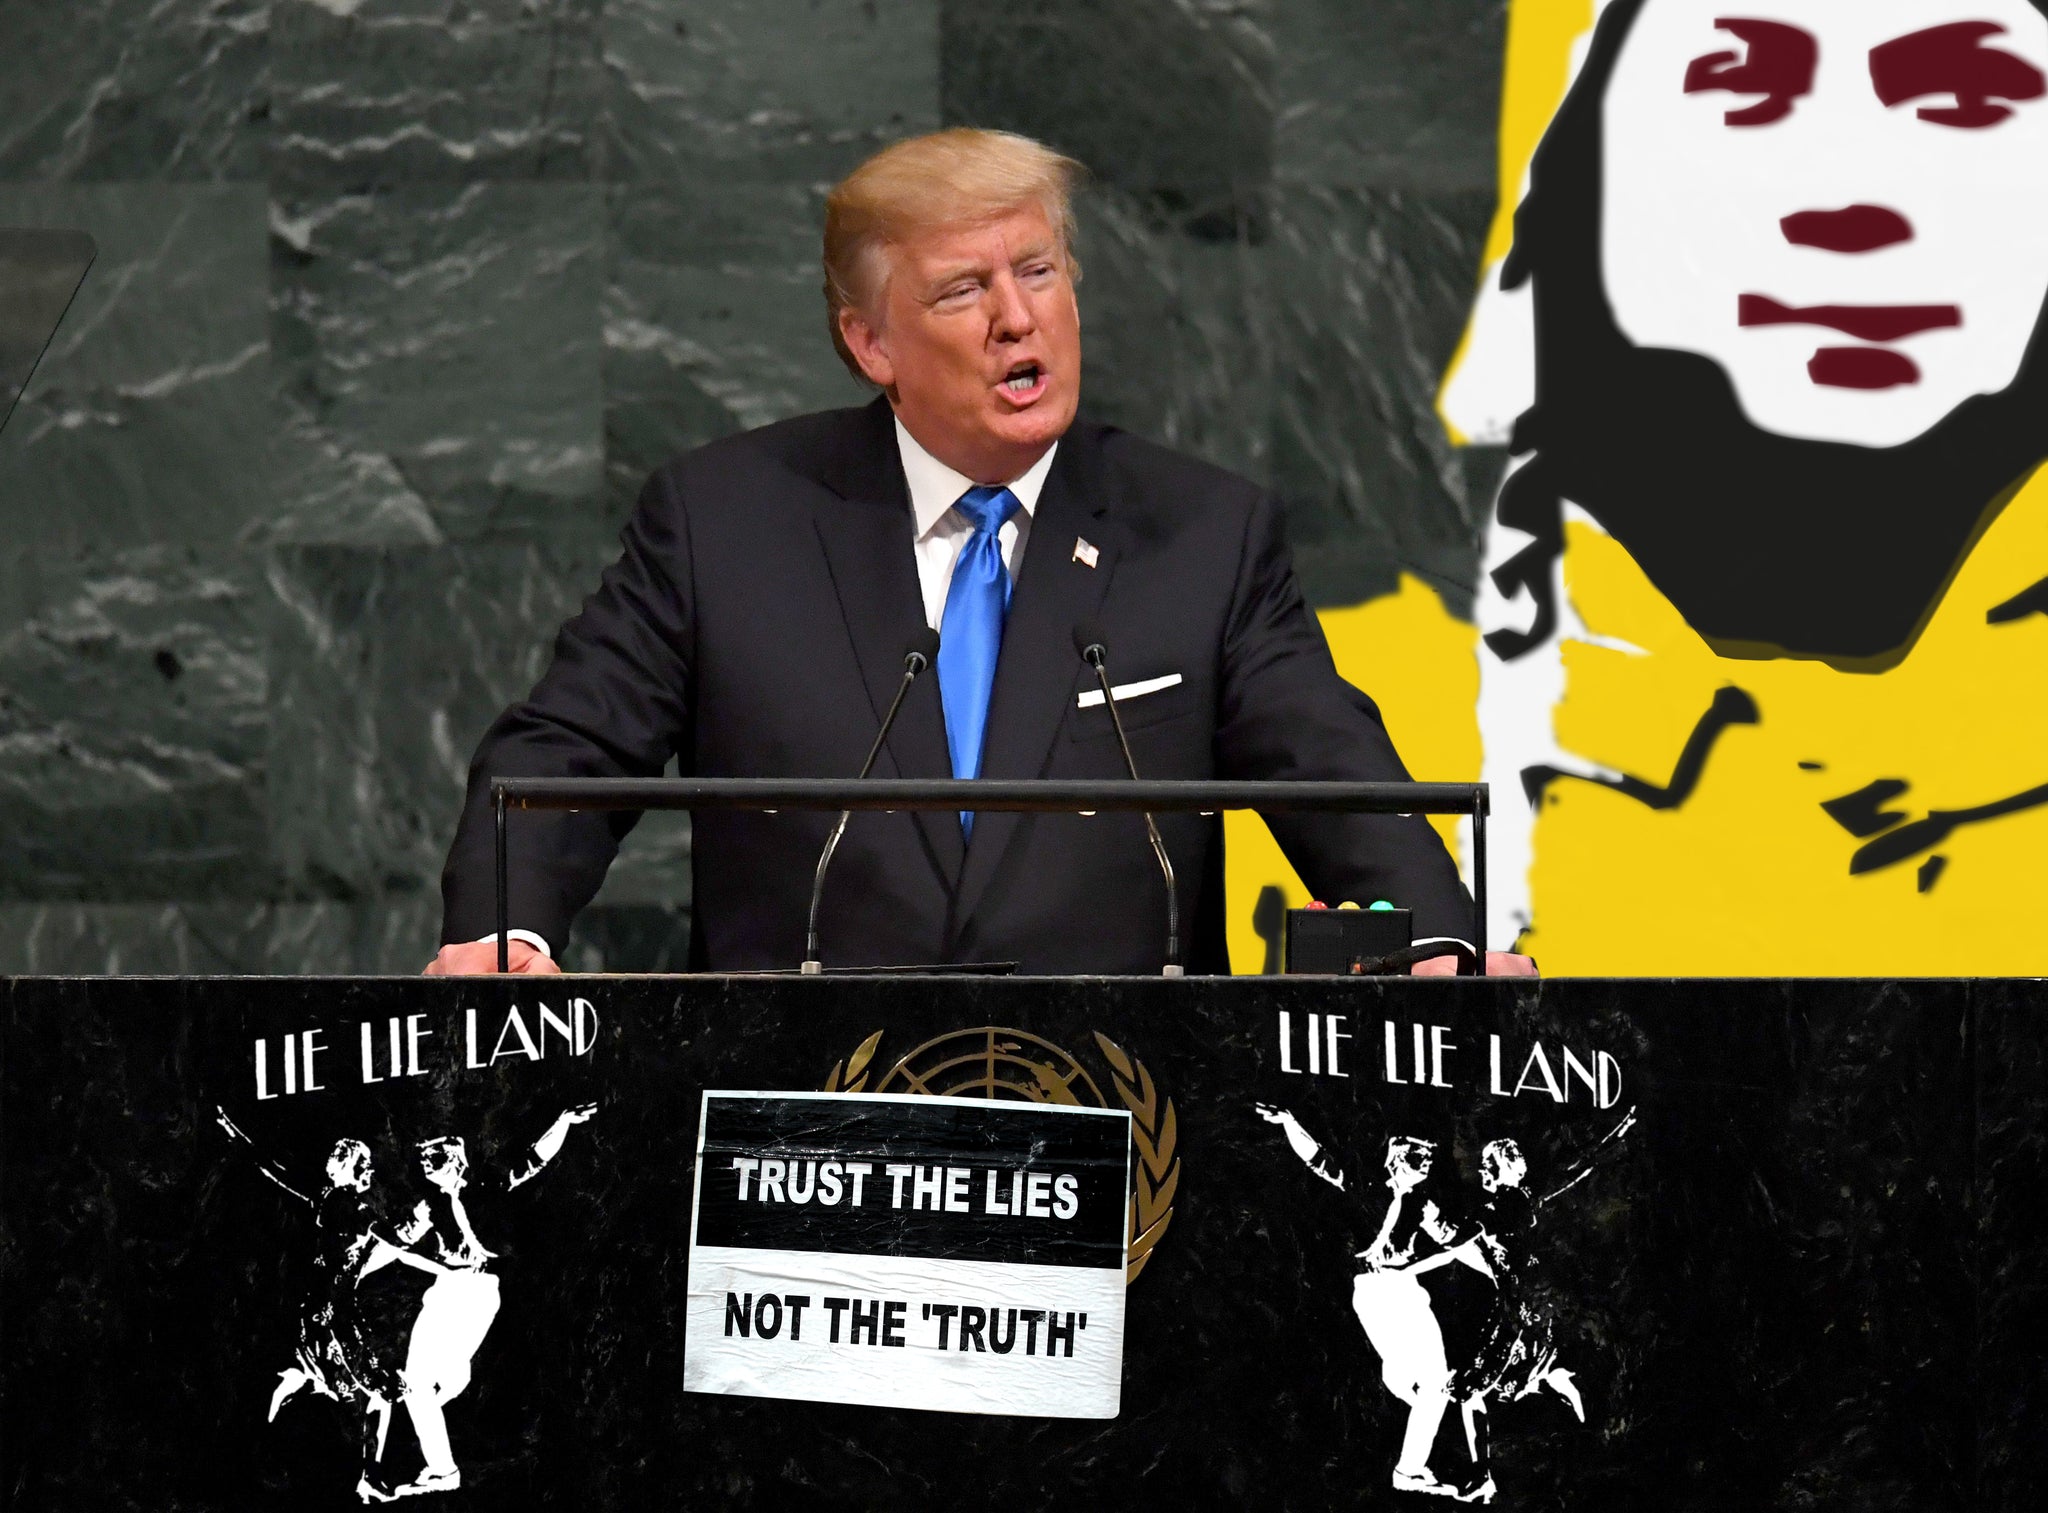 Street  art :climate war by Banksy at the UN headquarters its Donald trump VS Greta Thunberg